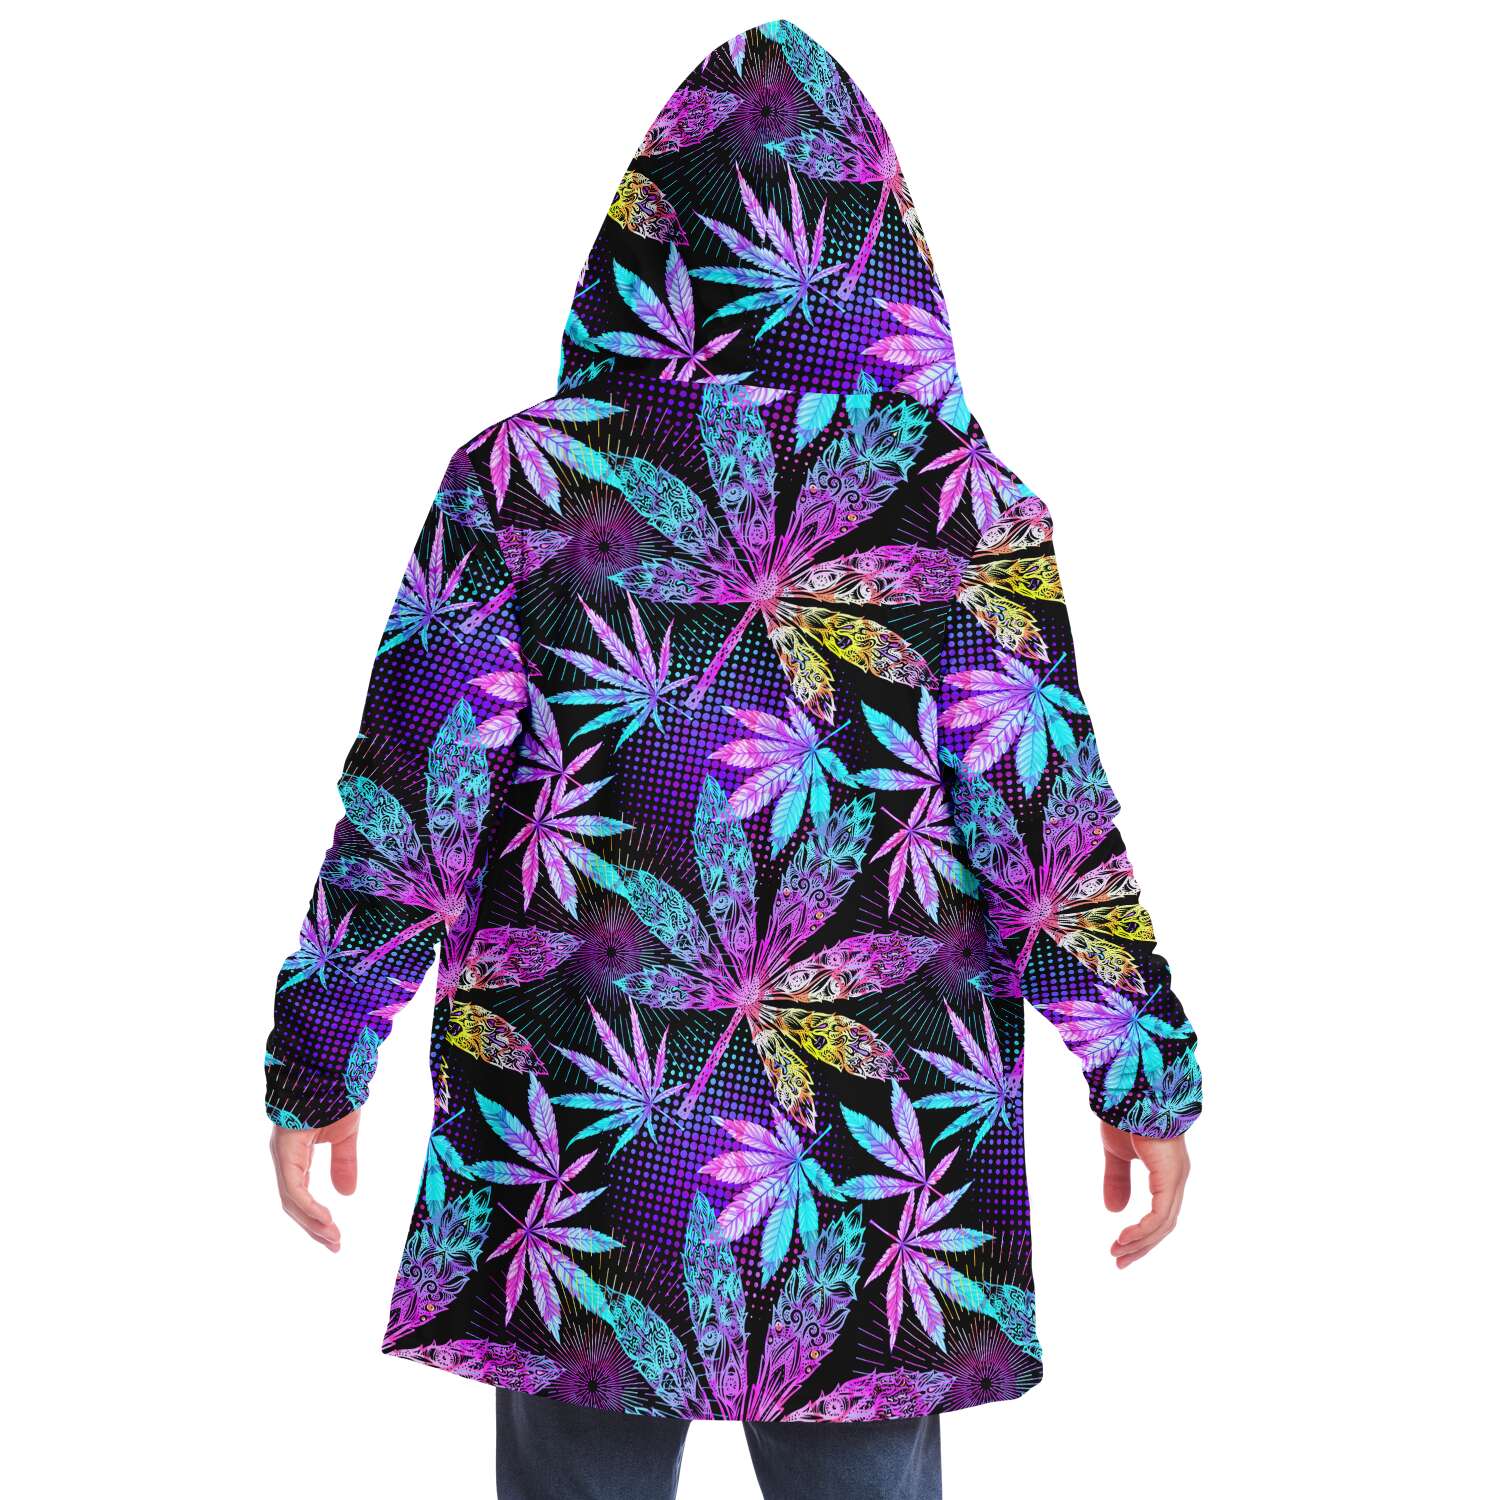 Trippy Cannabis Psychedelic Festival Cloak